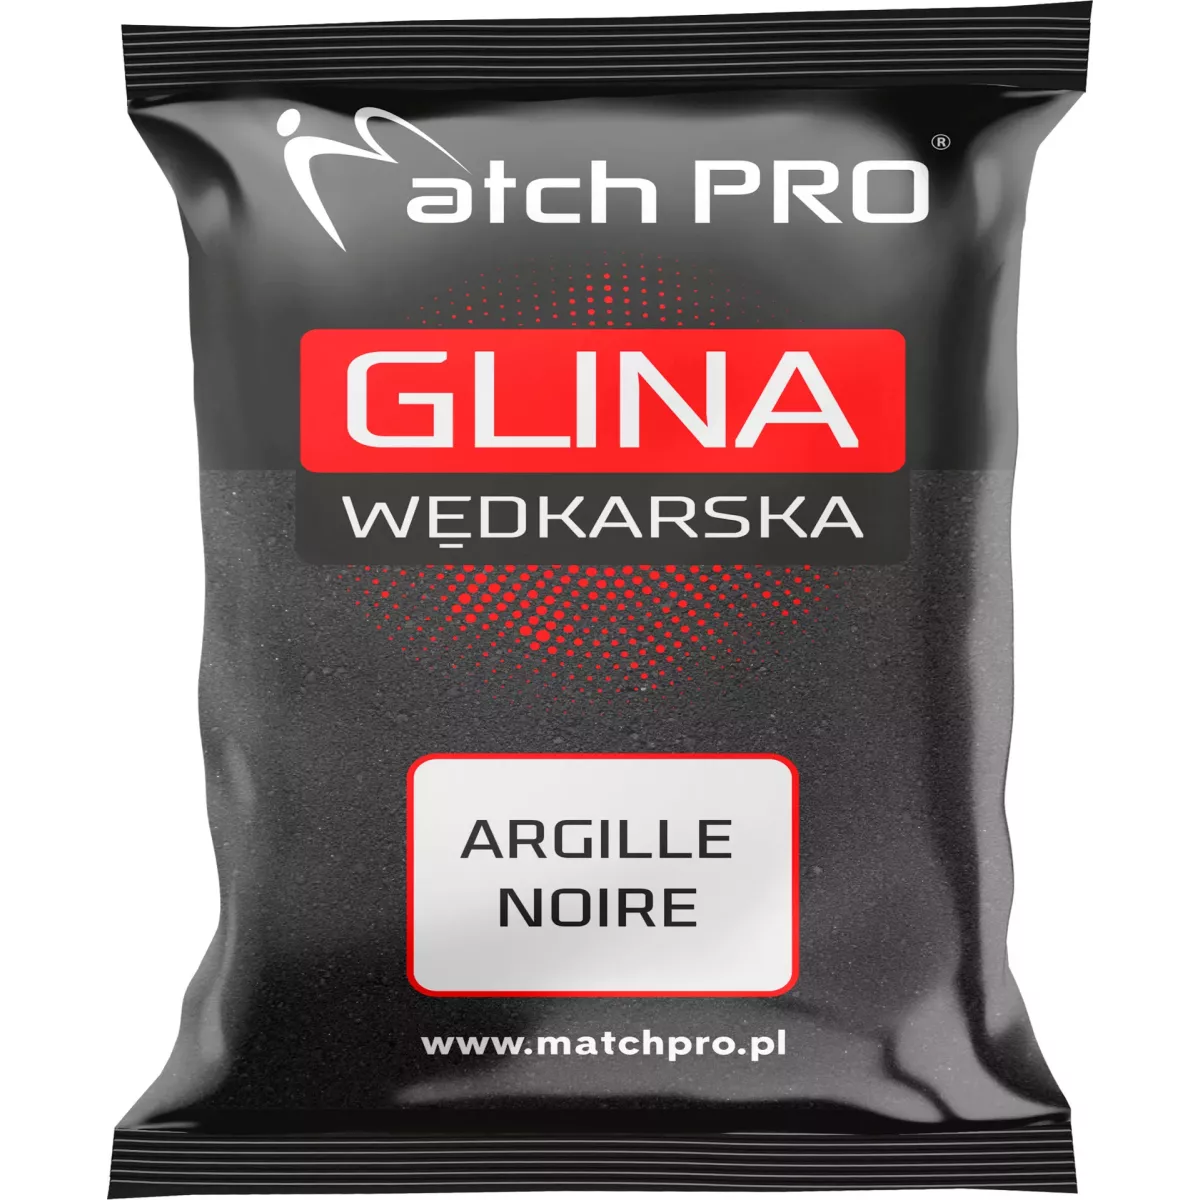 Glina MatchPro 2kg - ARGILE NOIRE Czarna